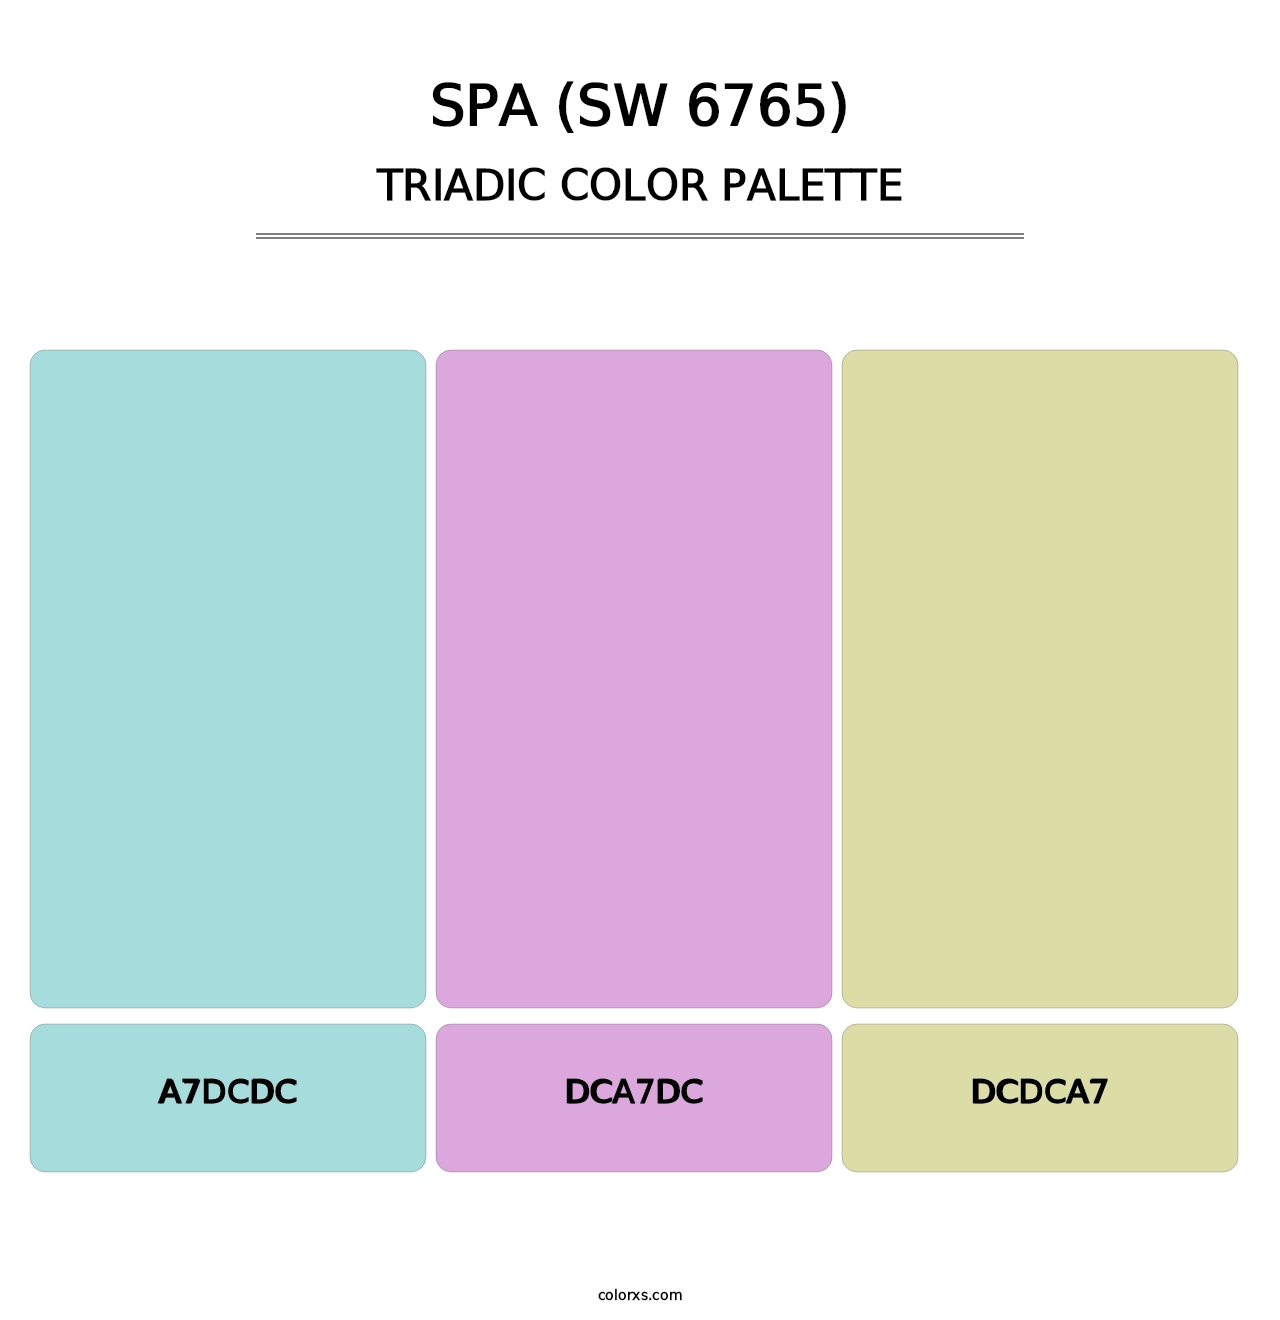 Spa (SW 6765) - Triadic Color Palette